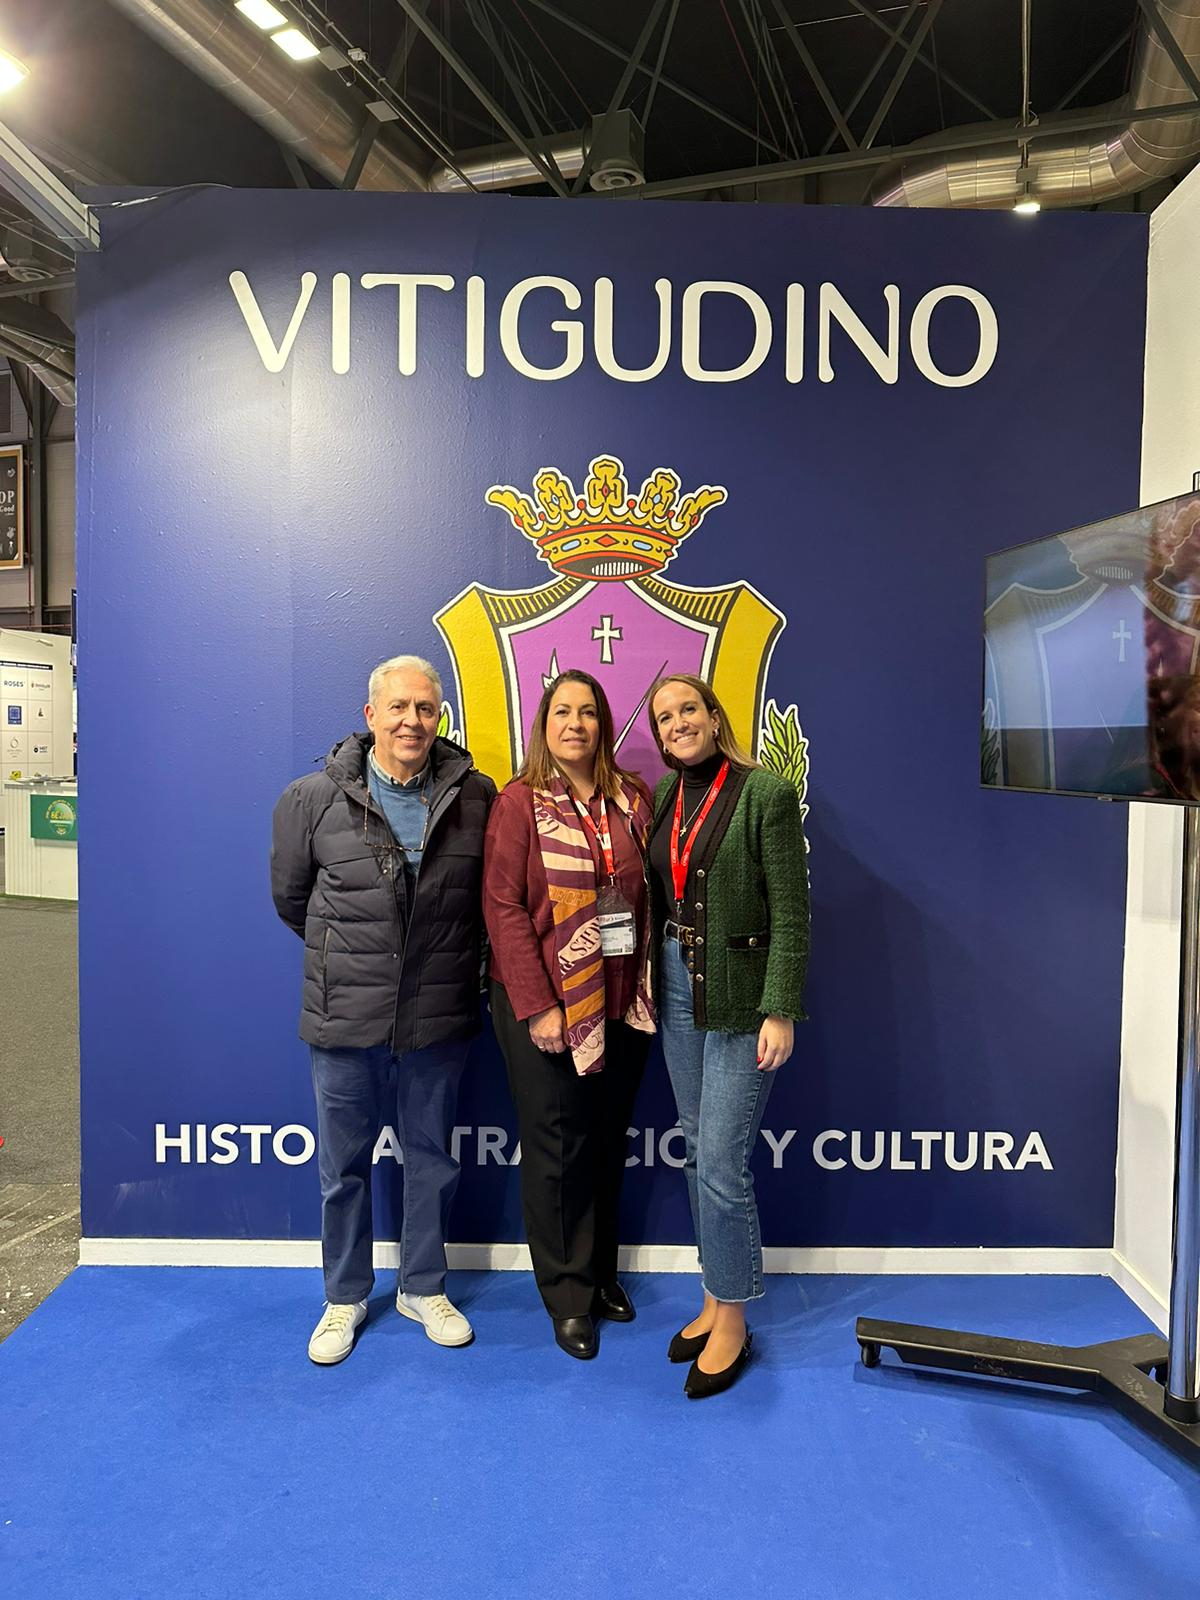 Vitigudino salió en las ondas de RNE a través del programa 'España rural' de Manolo HH